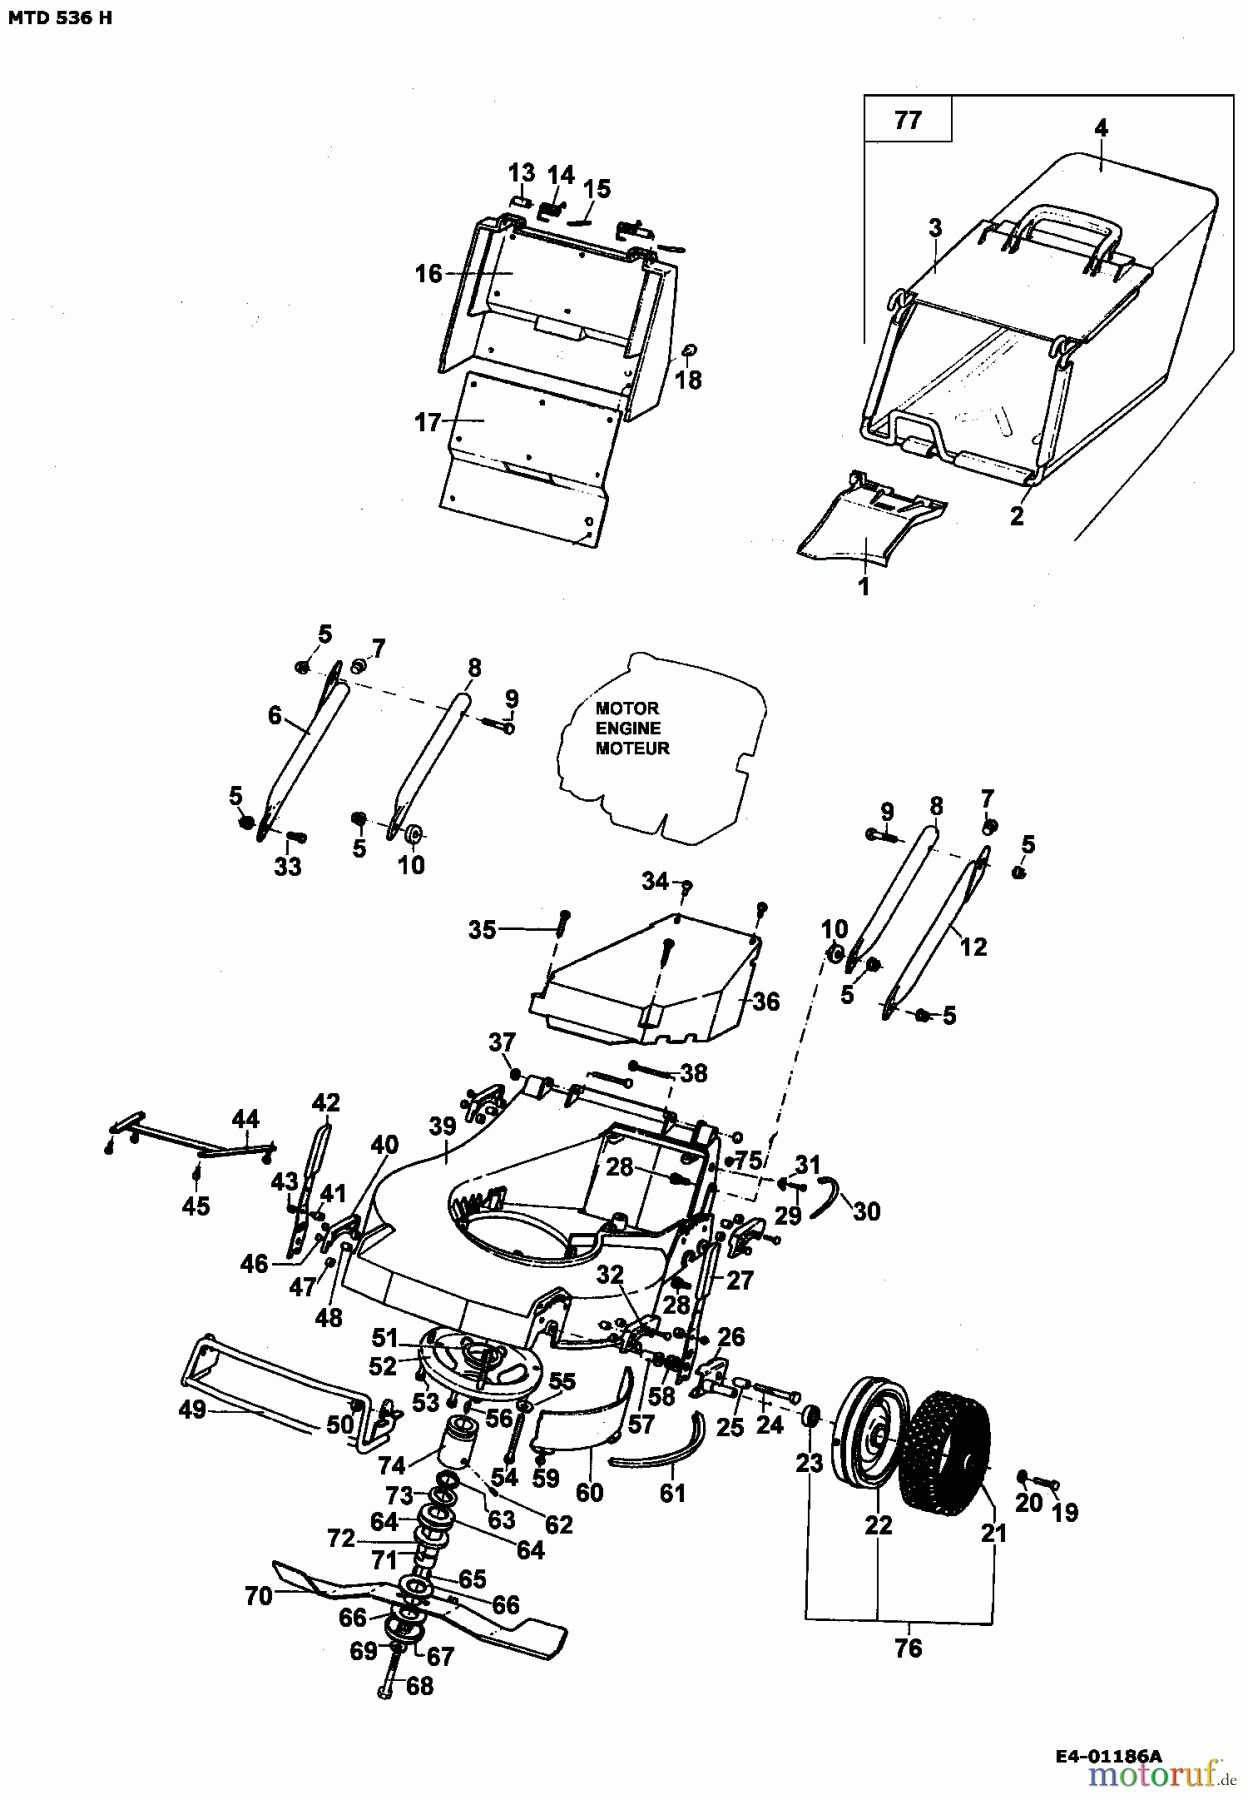  MTD Motormäher mit Antrieb 536 H 902B530A001  (1995) Grundgerät